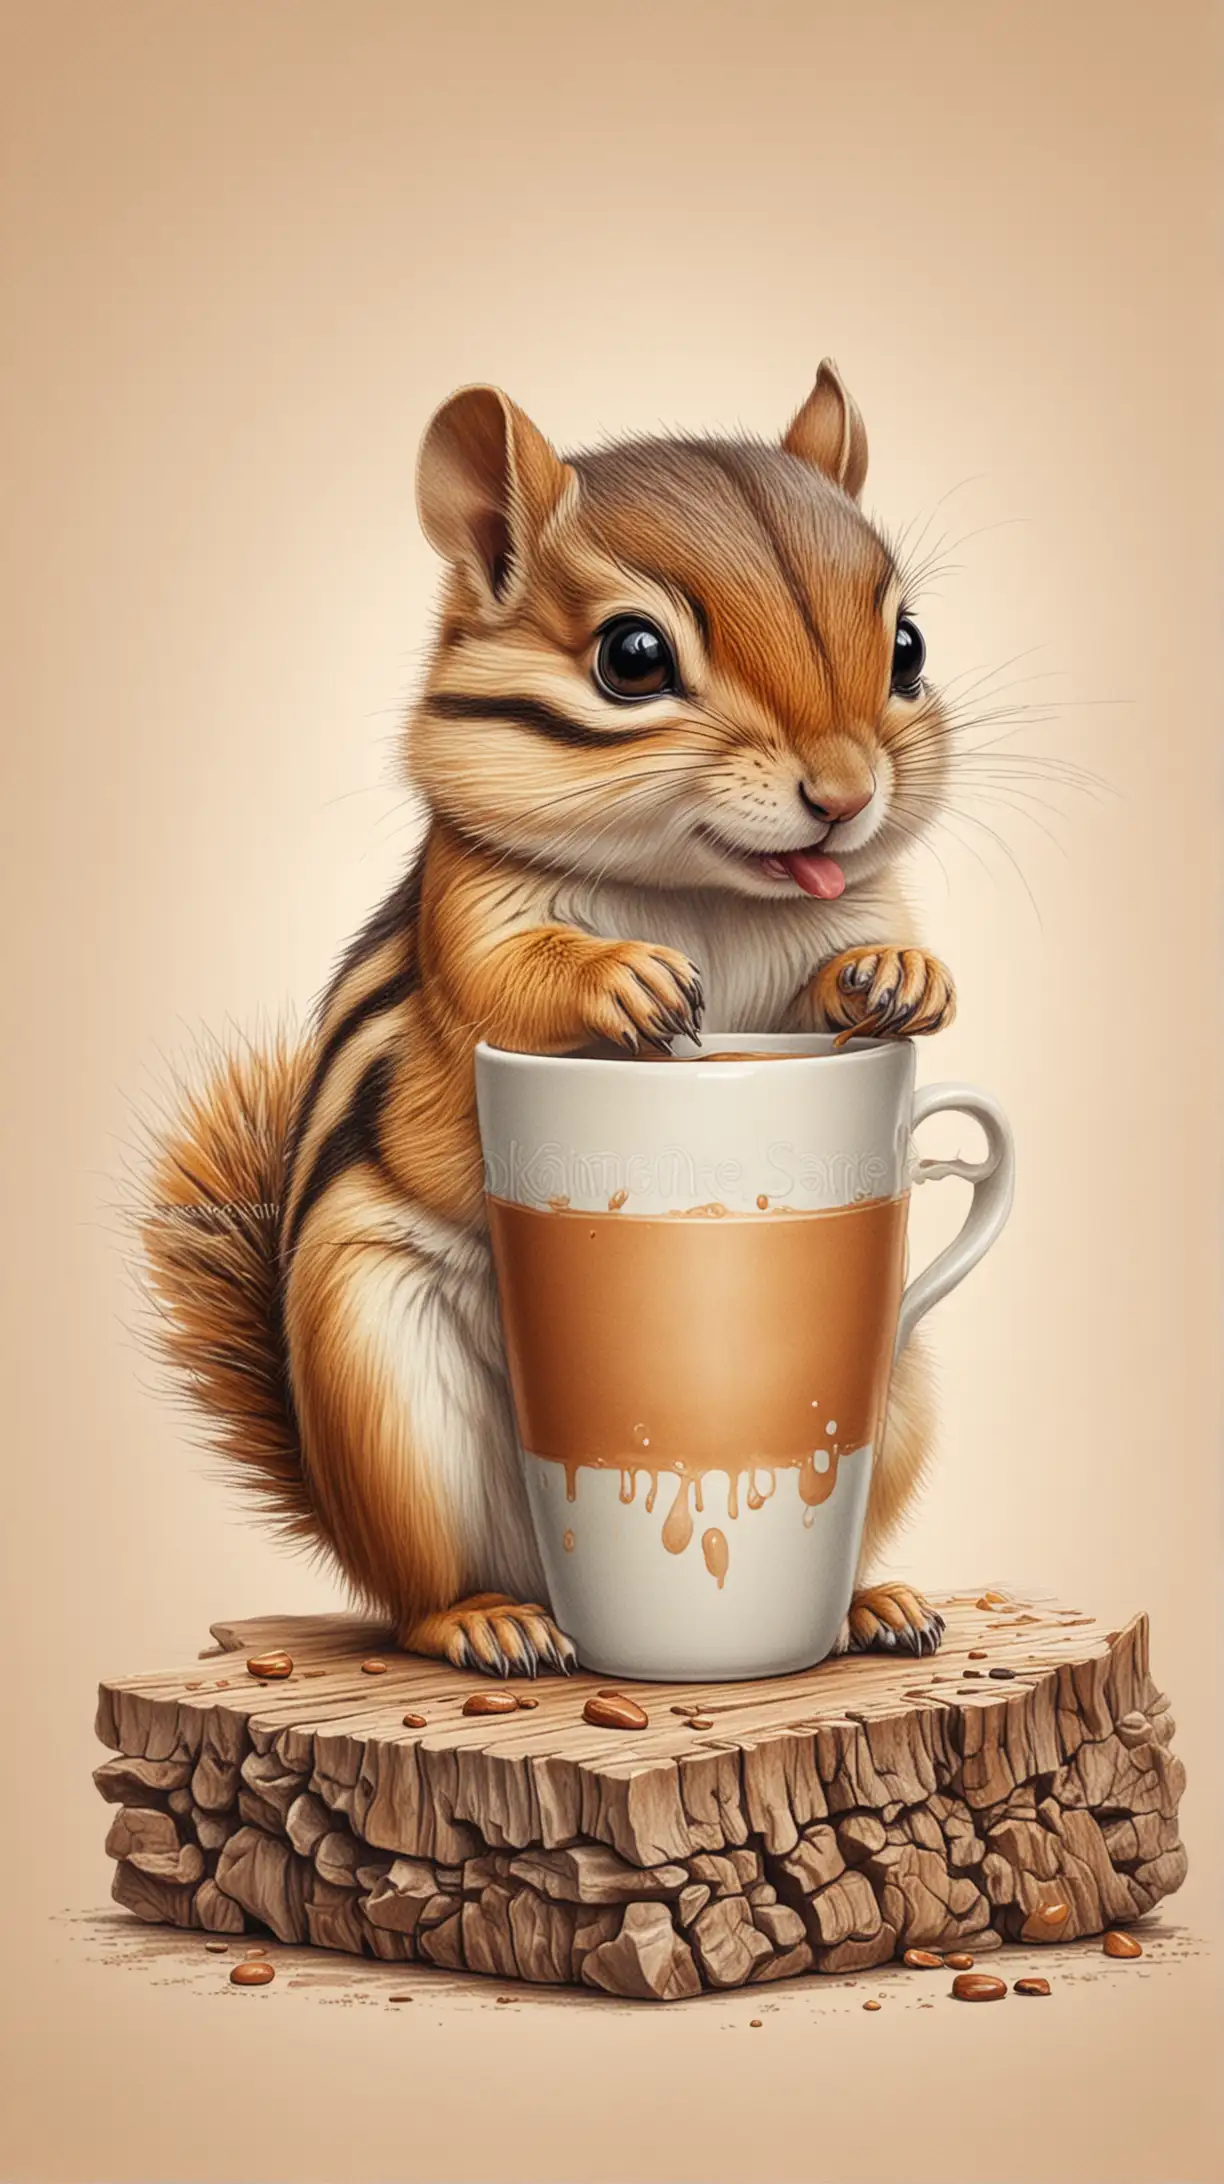 Adorable Chipmunk Enjoying Coffee in Delicate Pastel Drawing